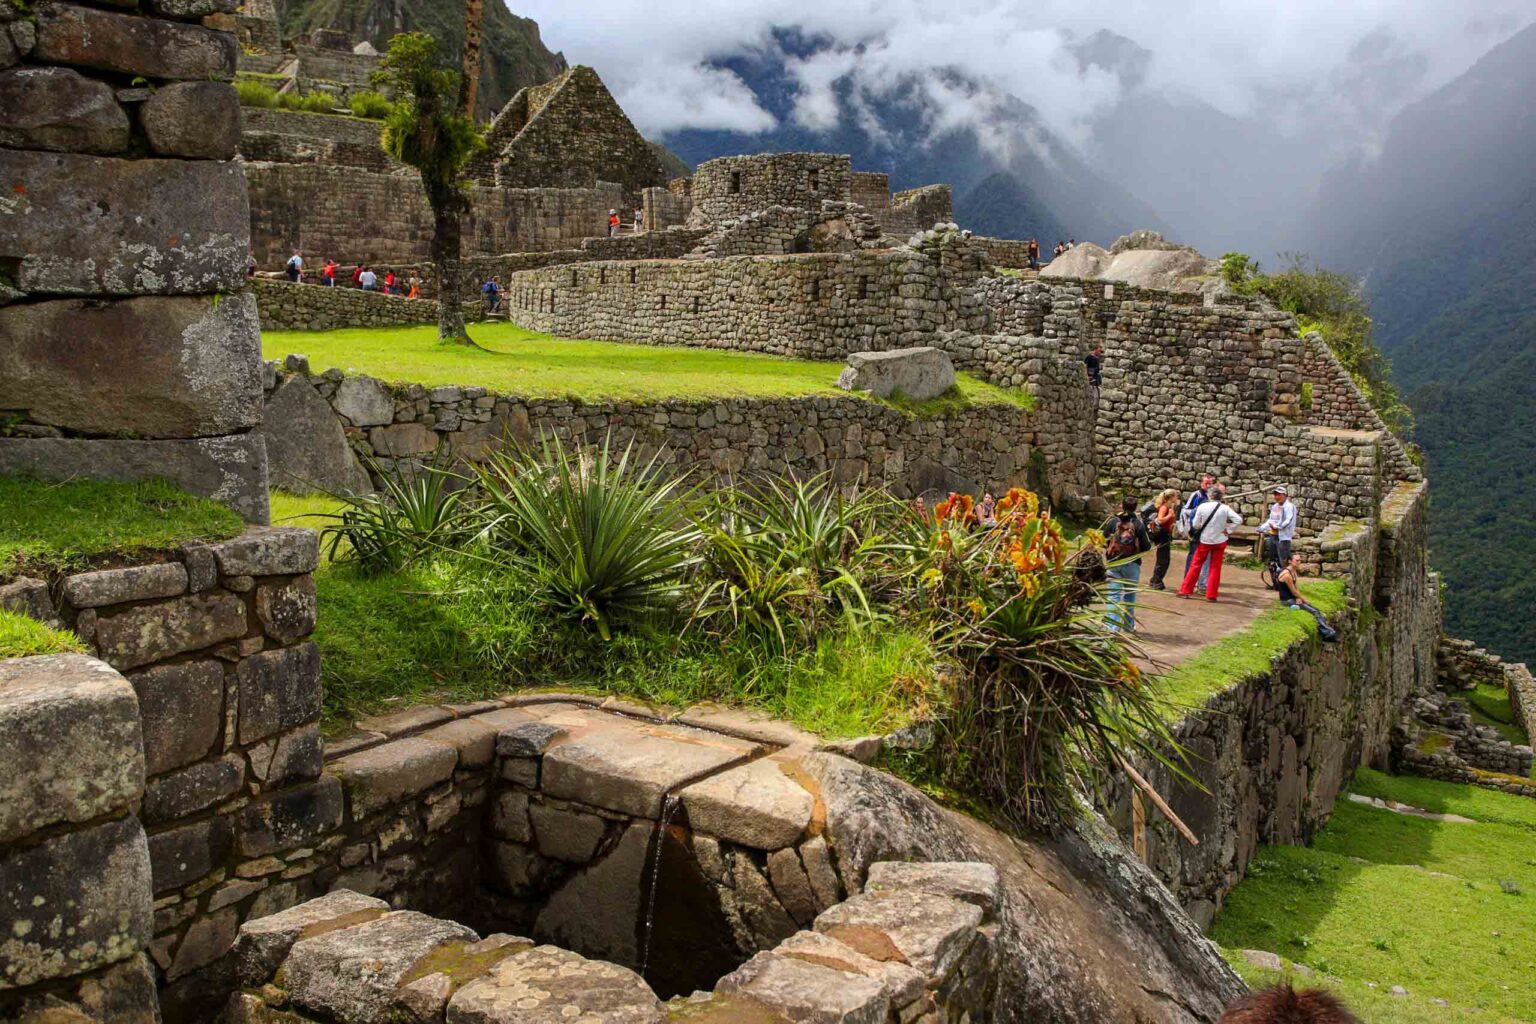 A group of tourists visiting Machu Picchu.